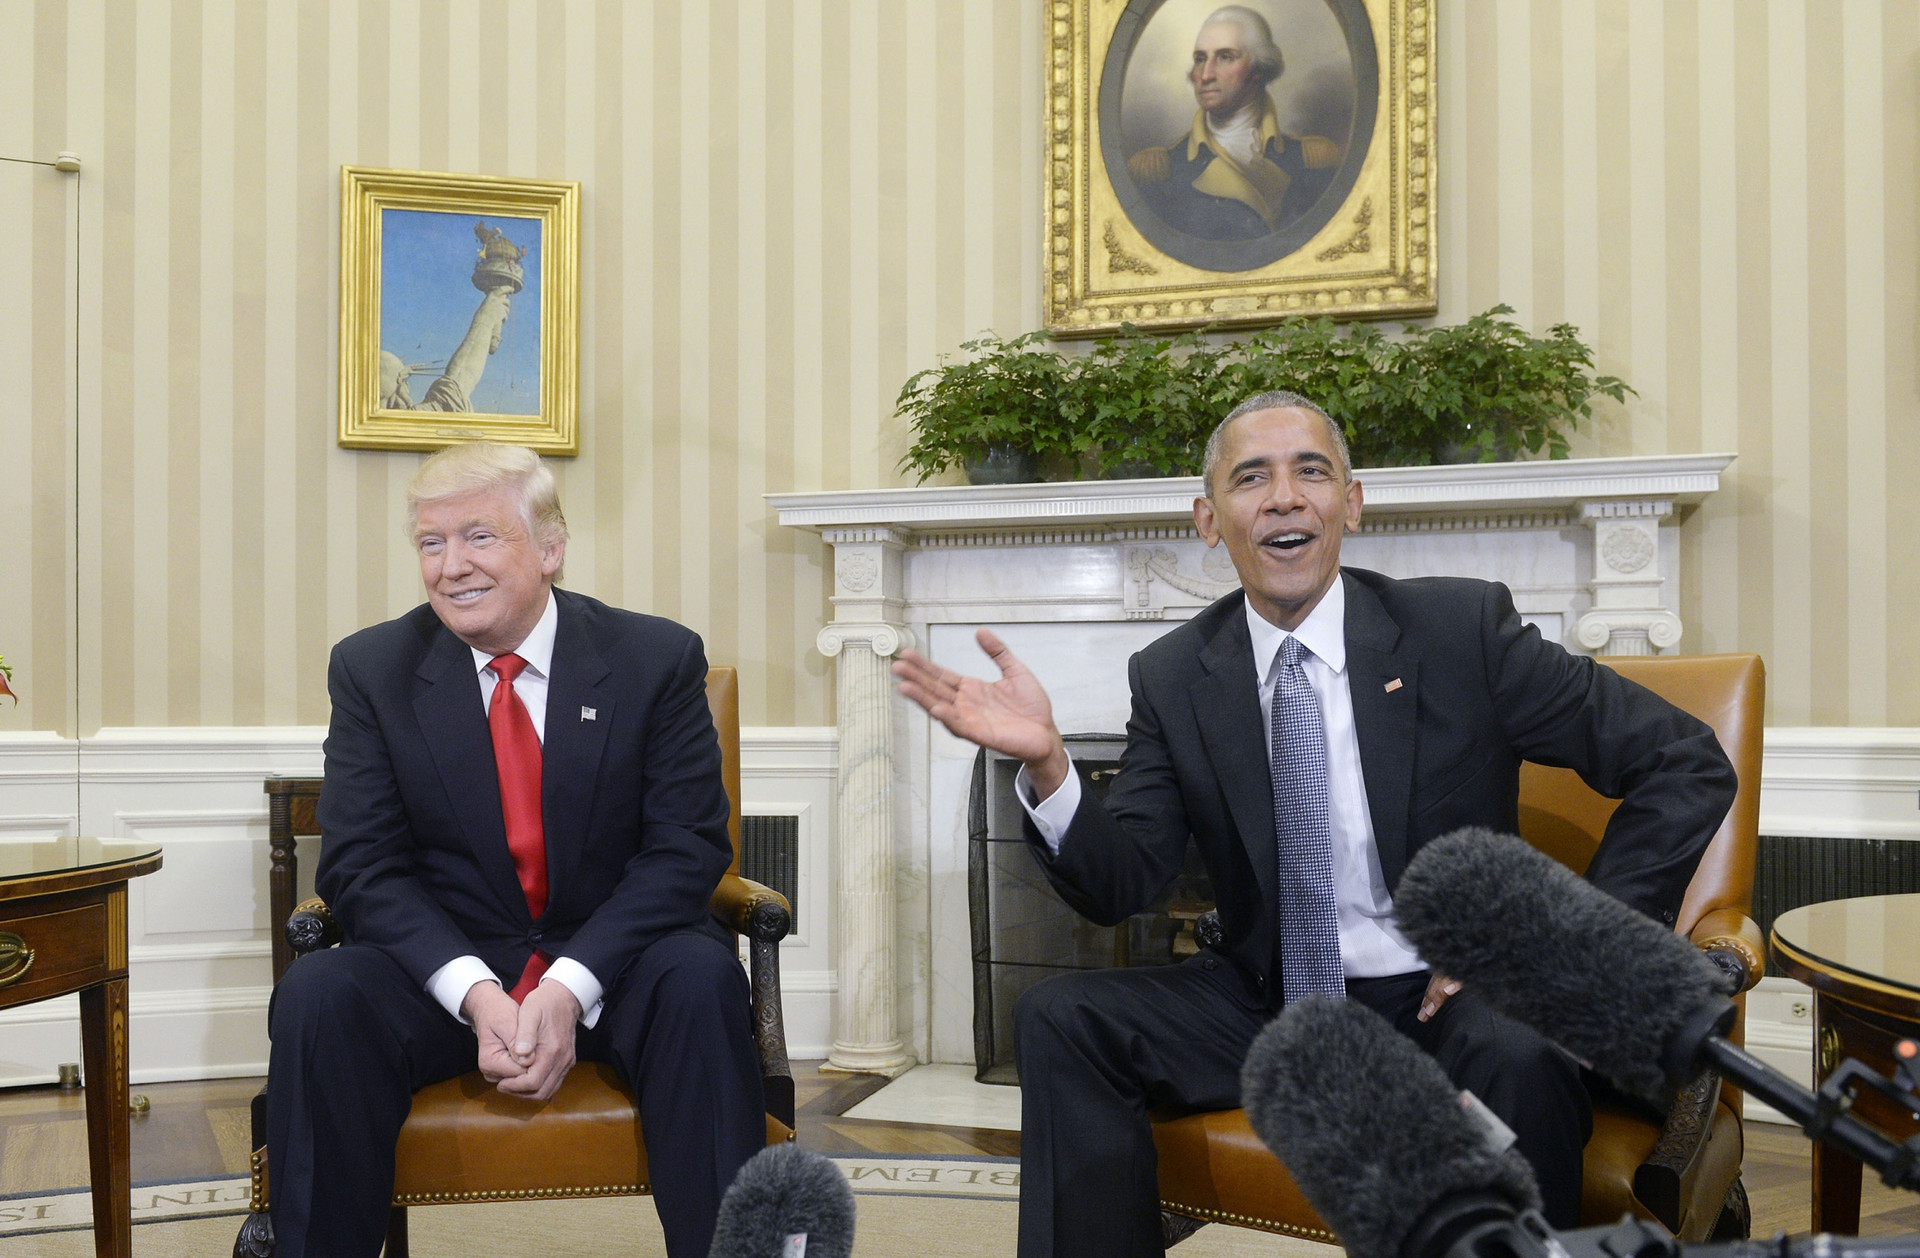 Kết quả hình ảnh cho picture of trump meeting with obama